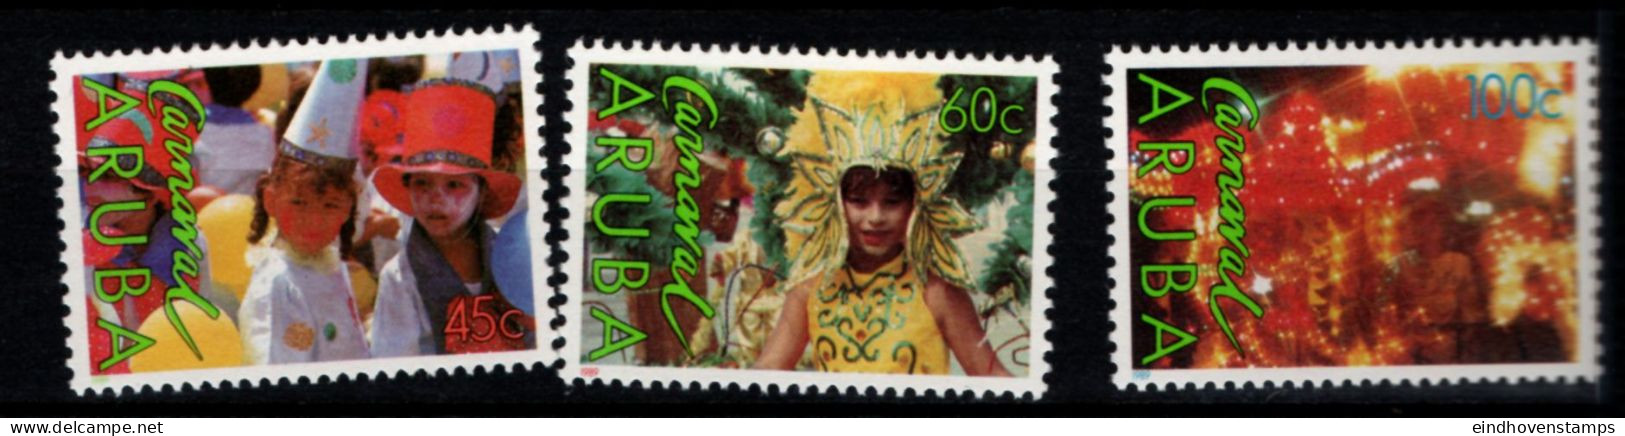 Aruba 1989 Carnaval 3 Values MNH Scenes - Carnaval